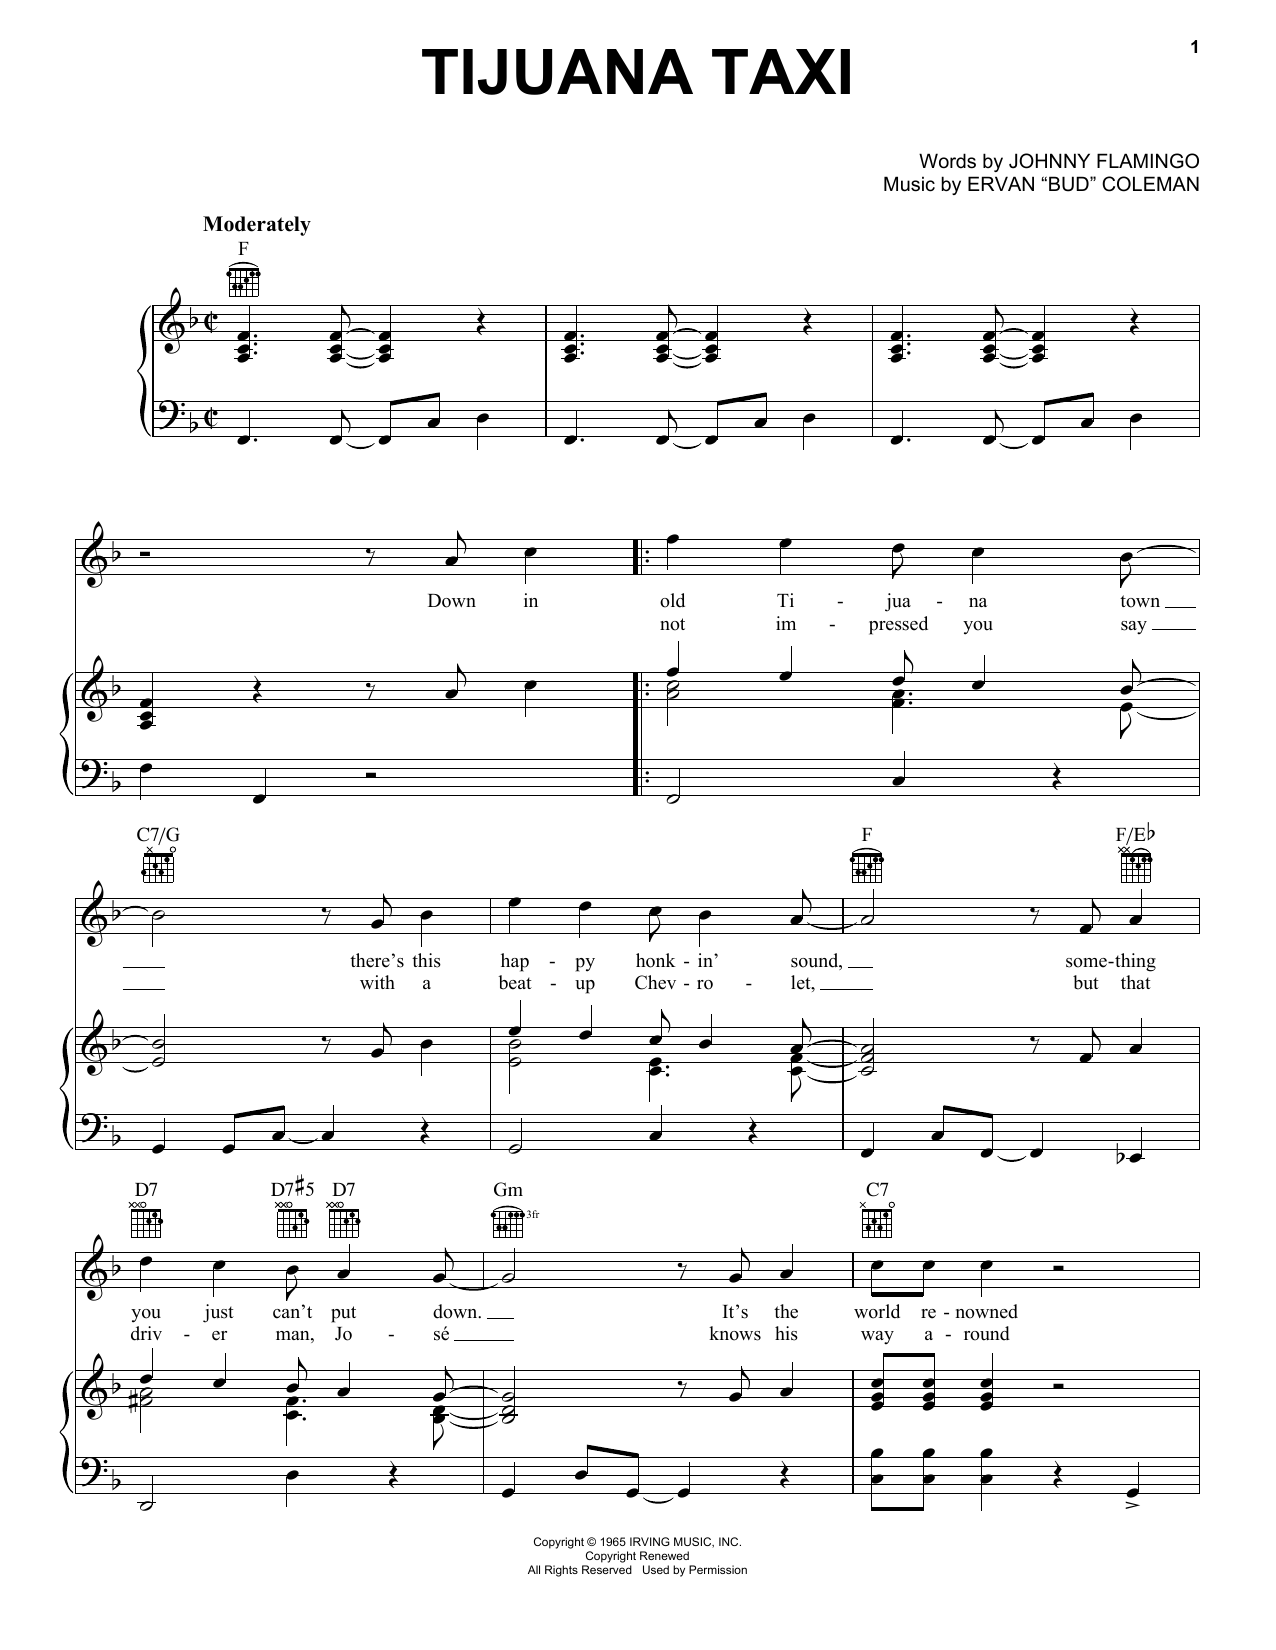 Herb Alpert & The Tijuana Brass Band Tijuana Taxi Sheet Music Notes & Chords for Trombone - Download or Print PDF